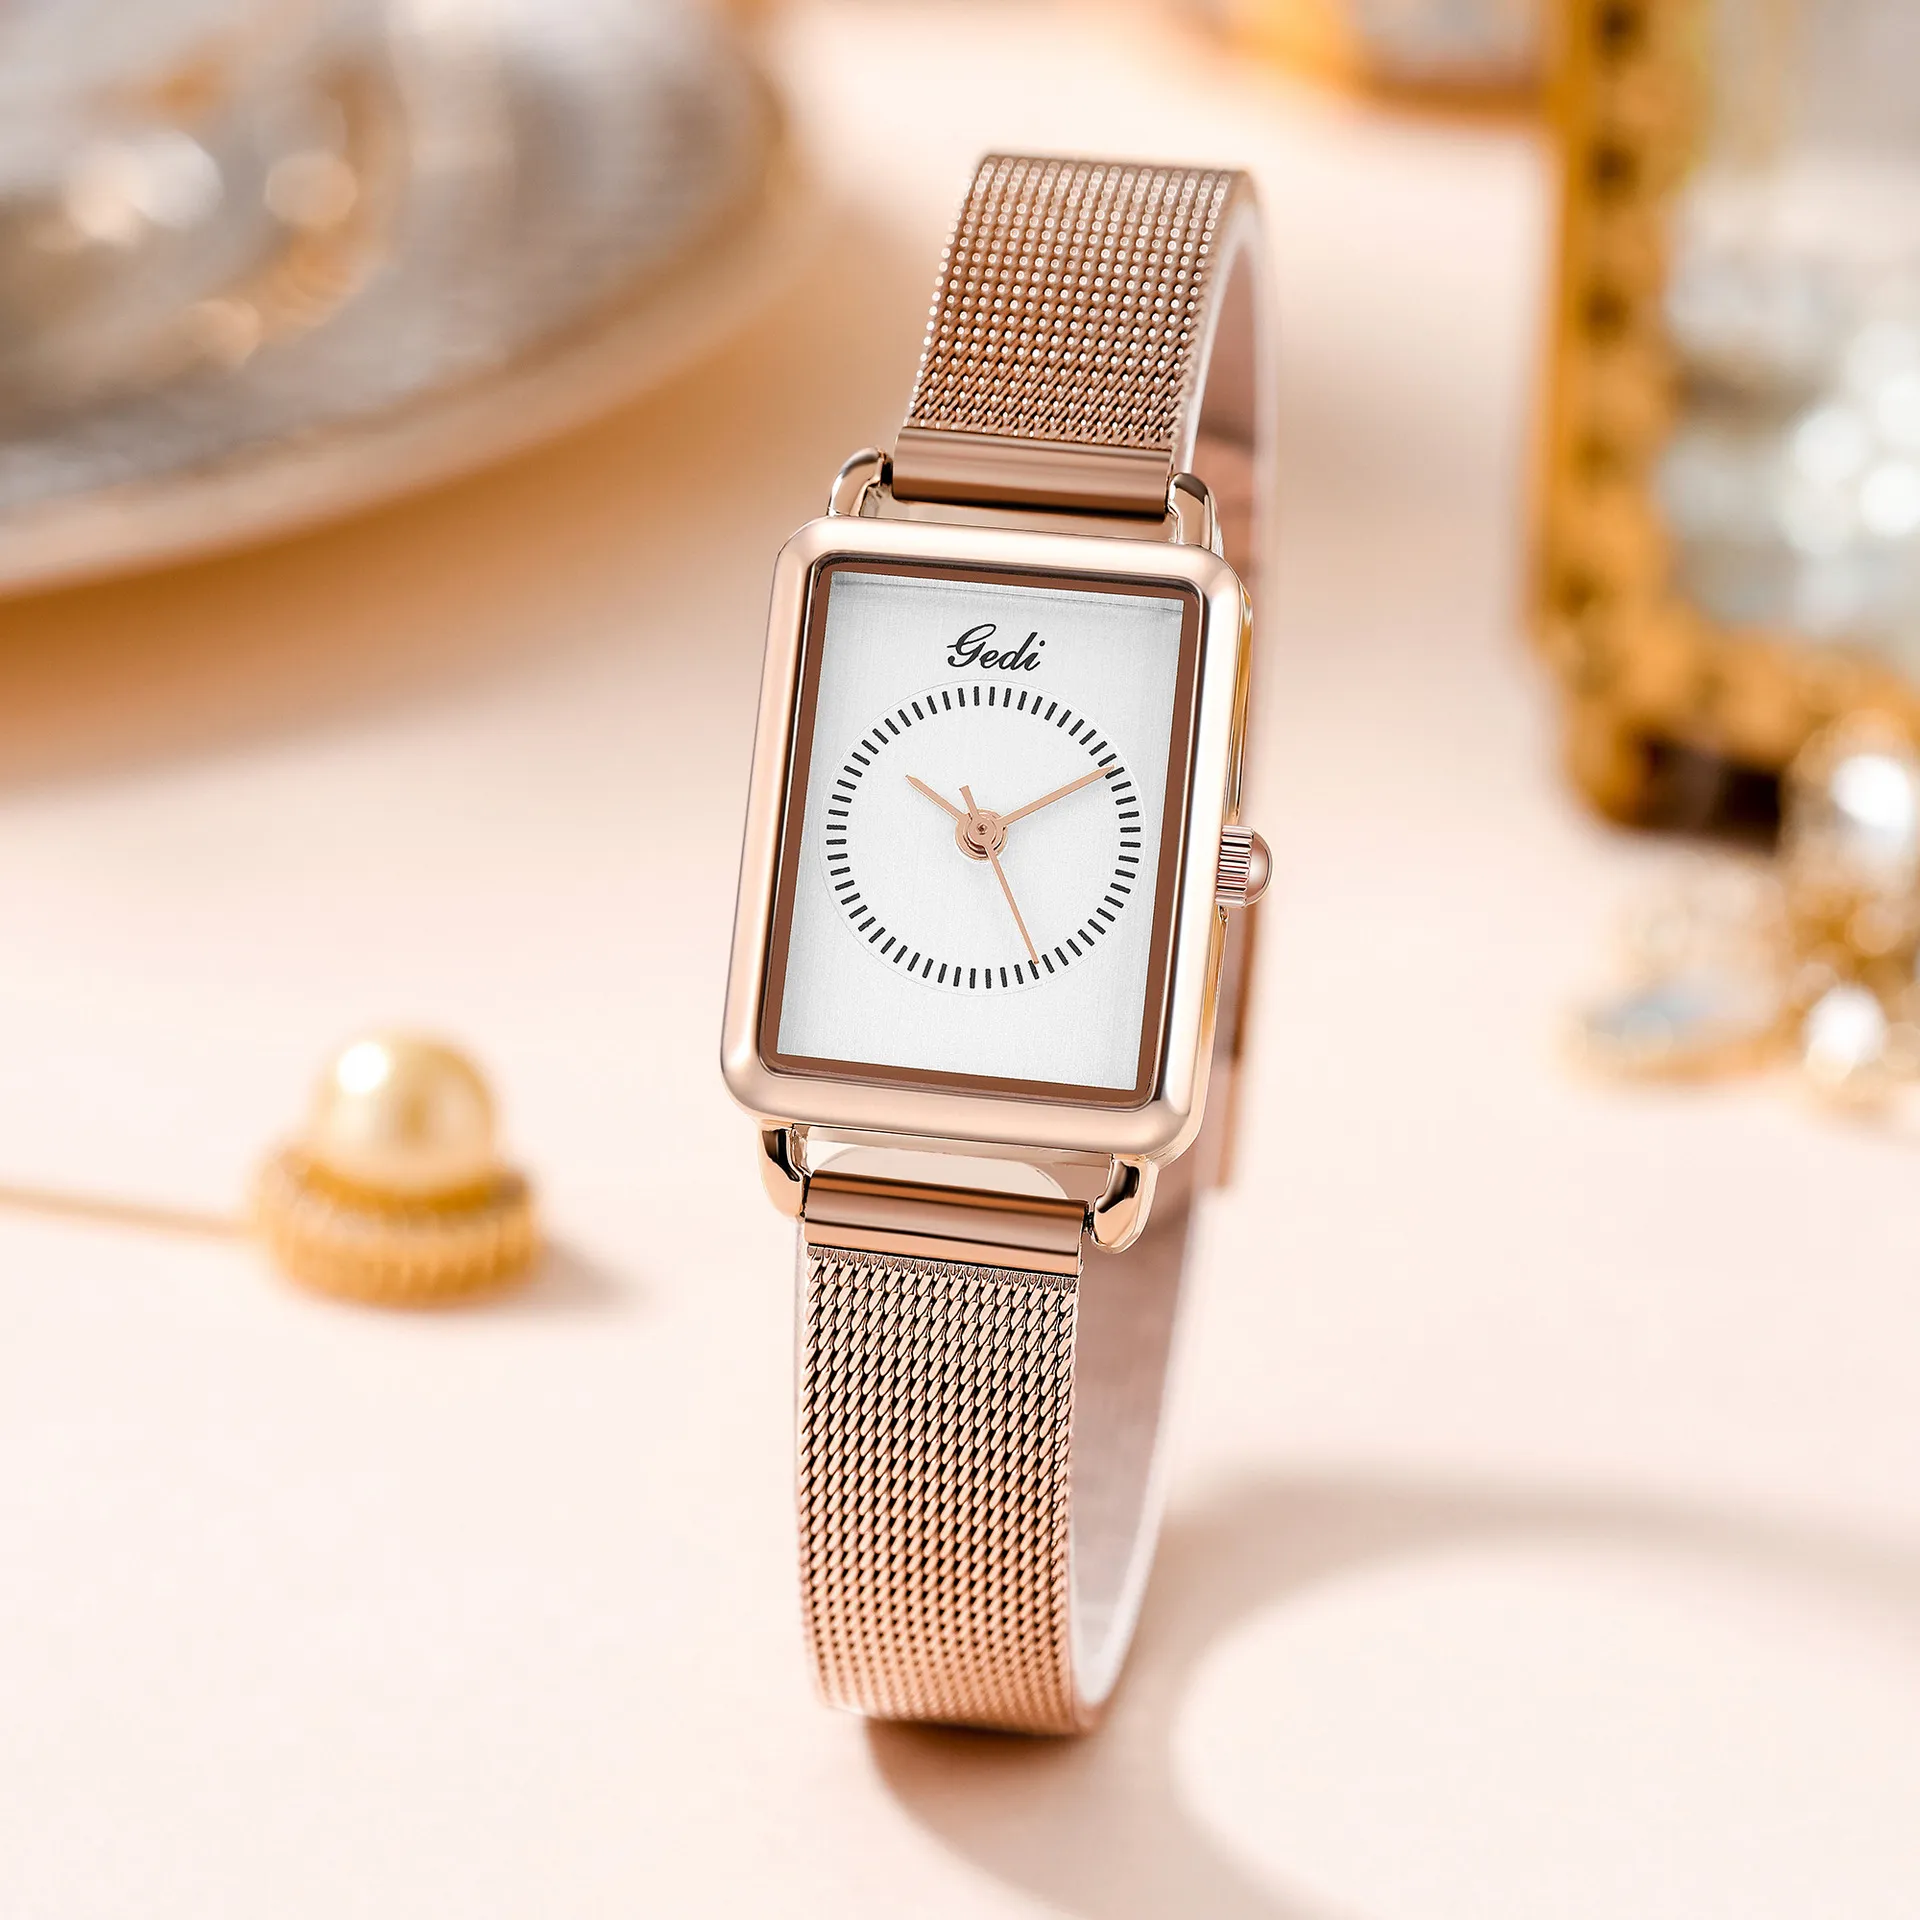 Womens watch Watches high quality Luxury designer Fashion Quartz-Battery waterproof Stainless Steel 21mm watch